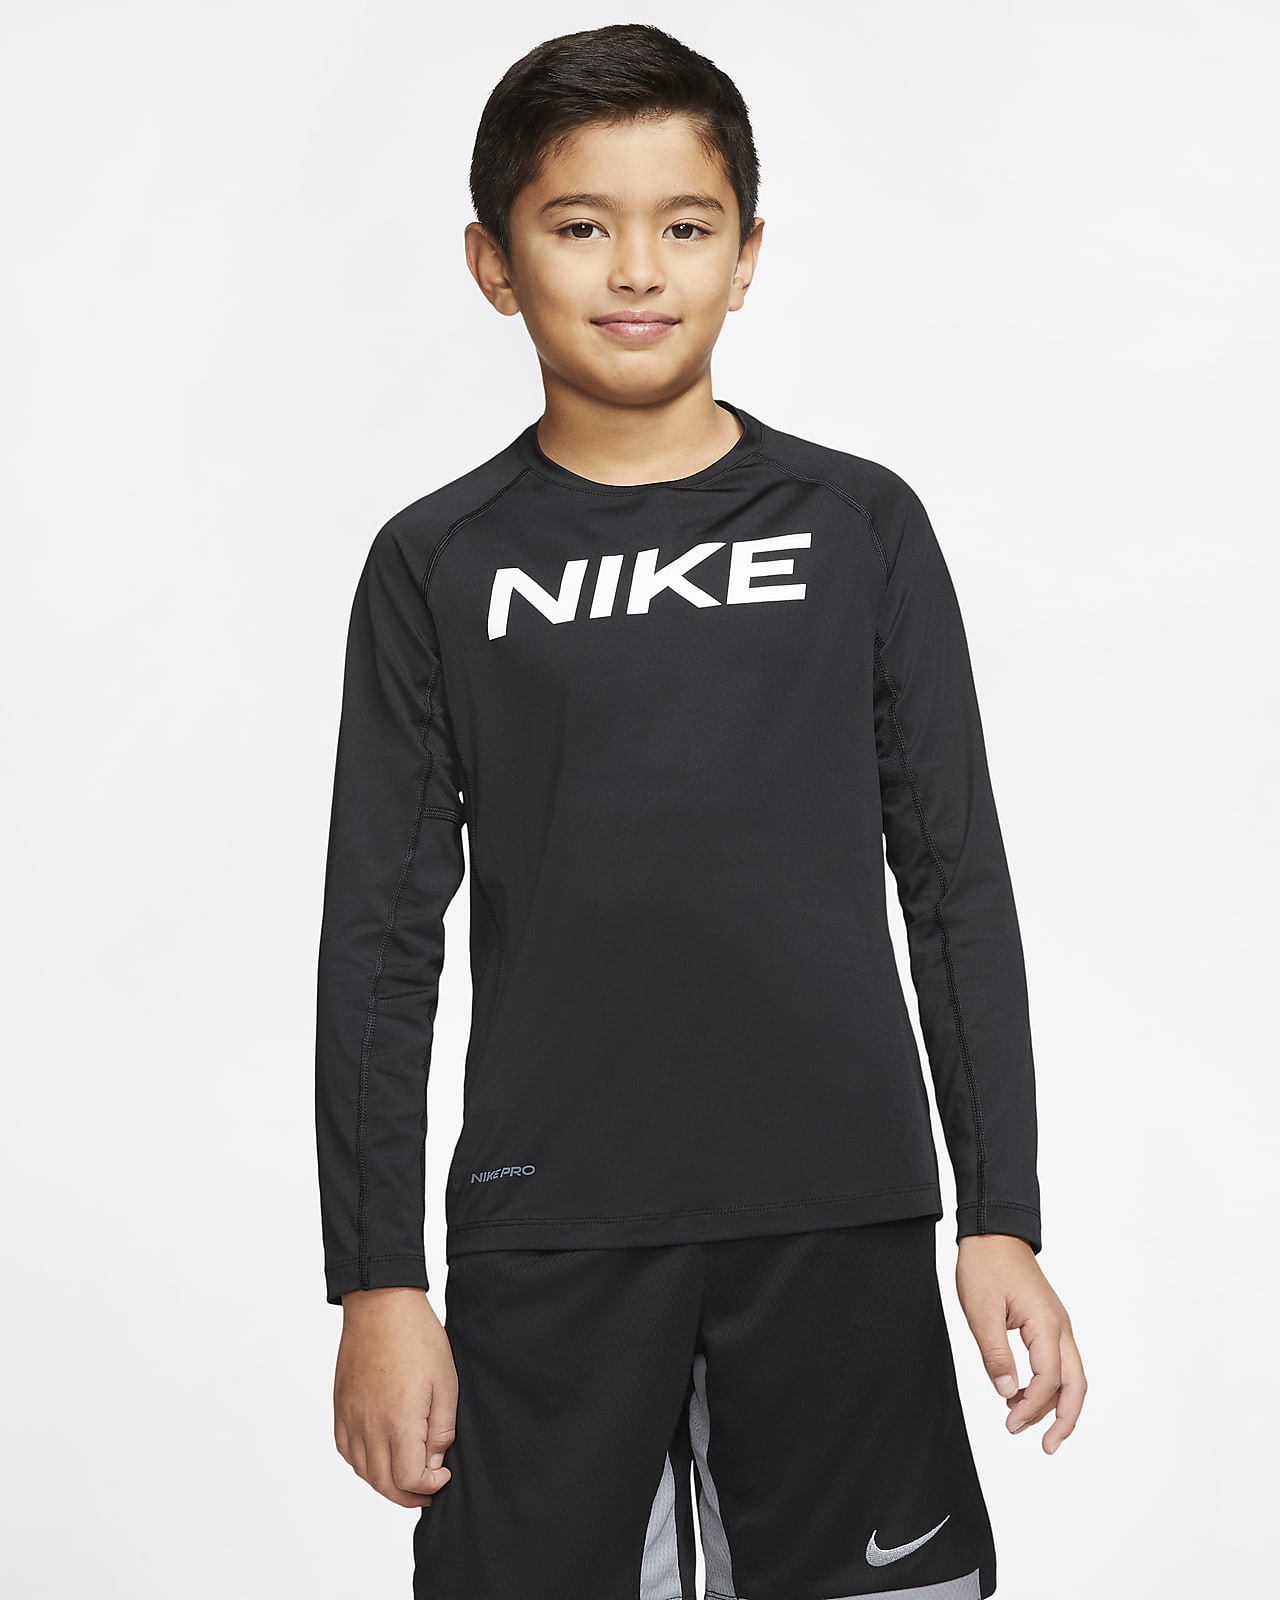 Nike Pro Langarm-Trainingsoberteil für ältere Kinder (Jungen)